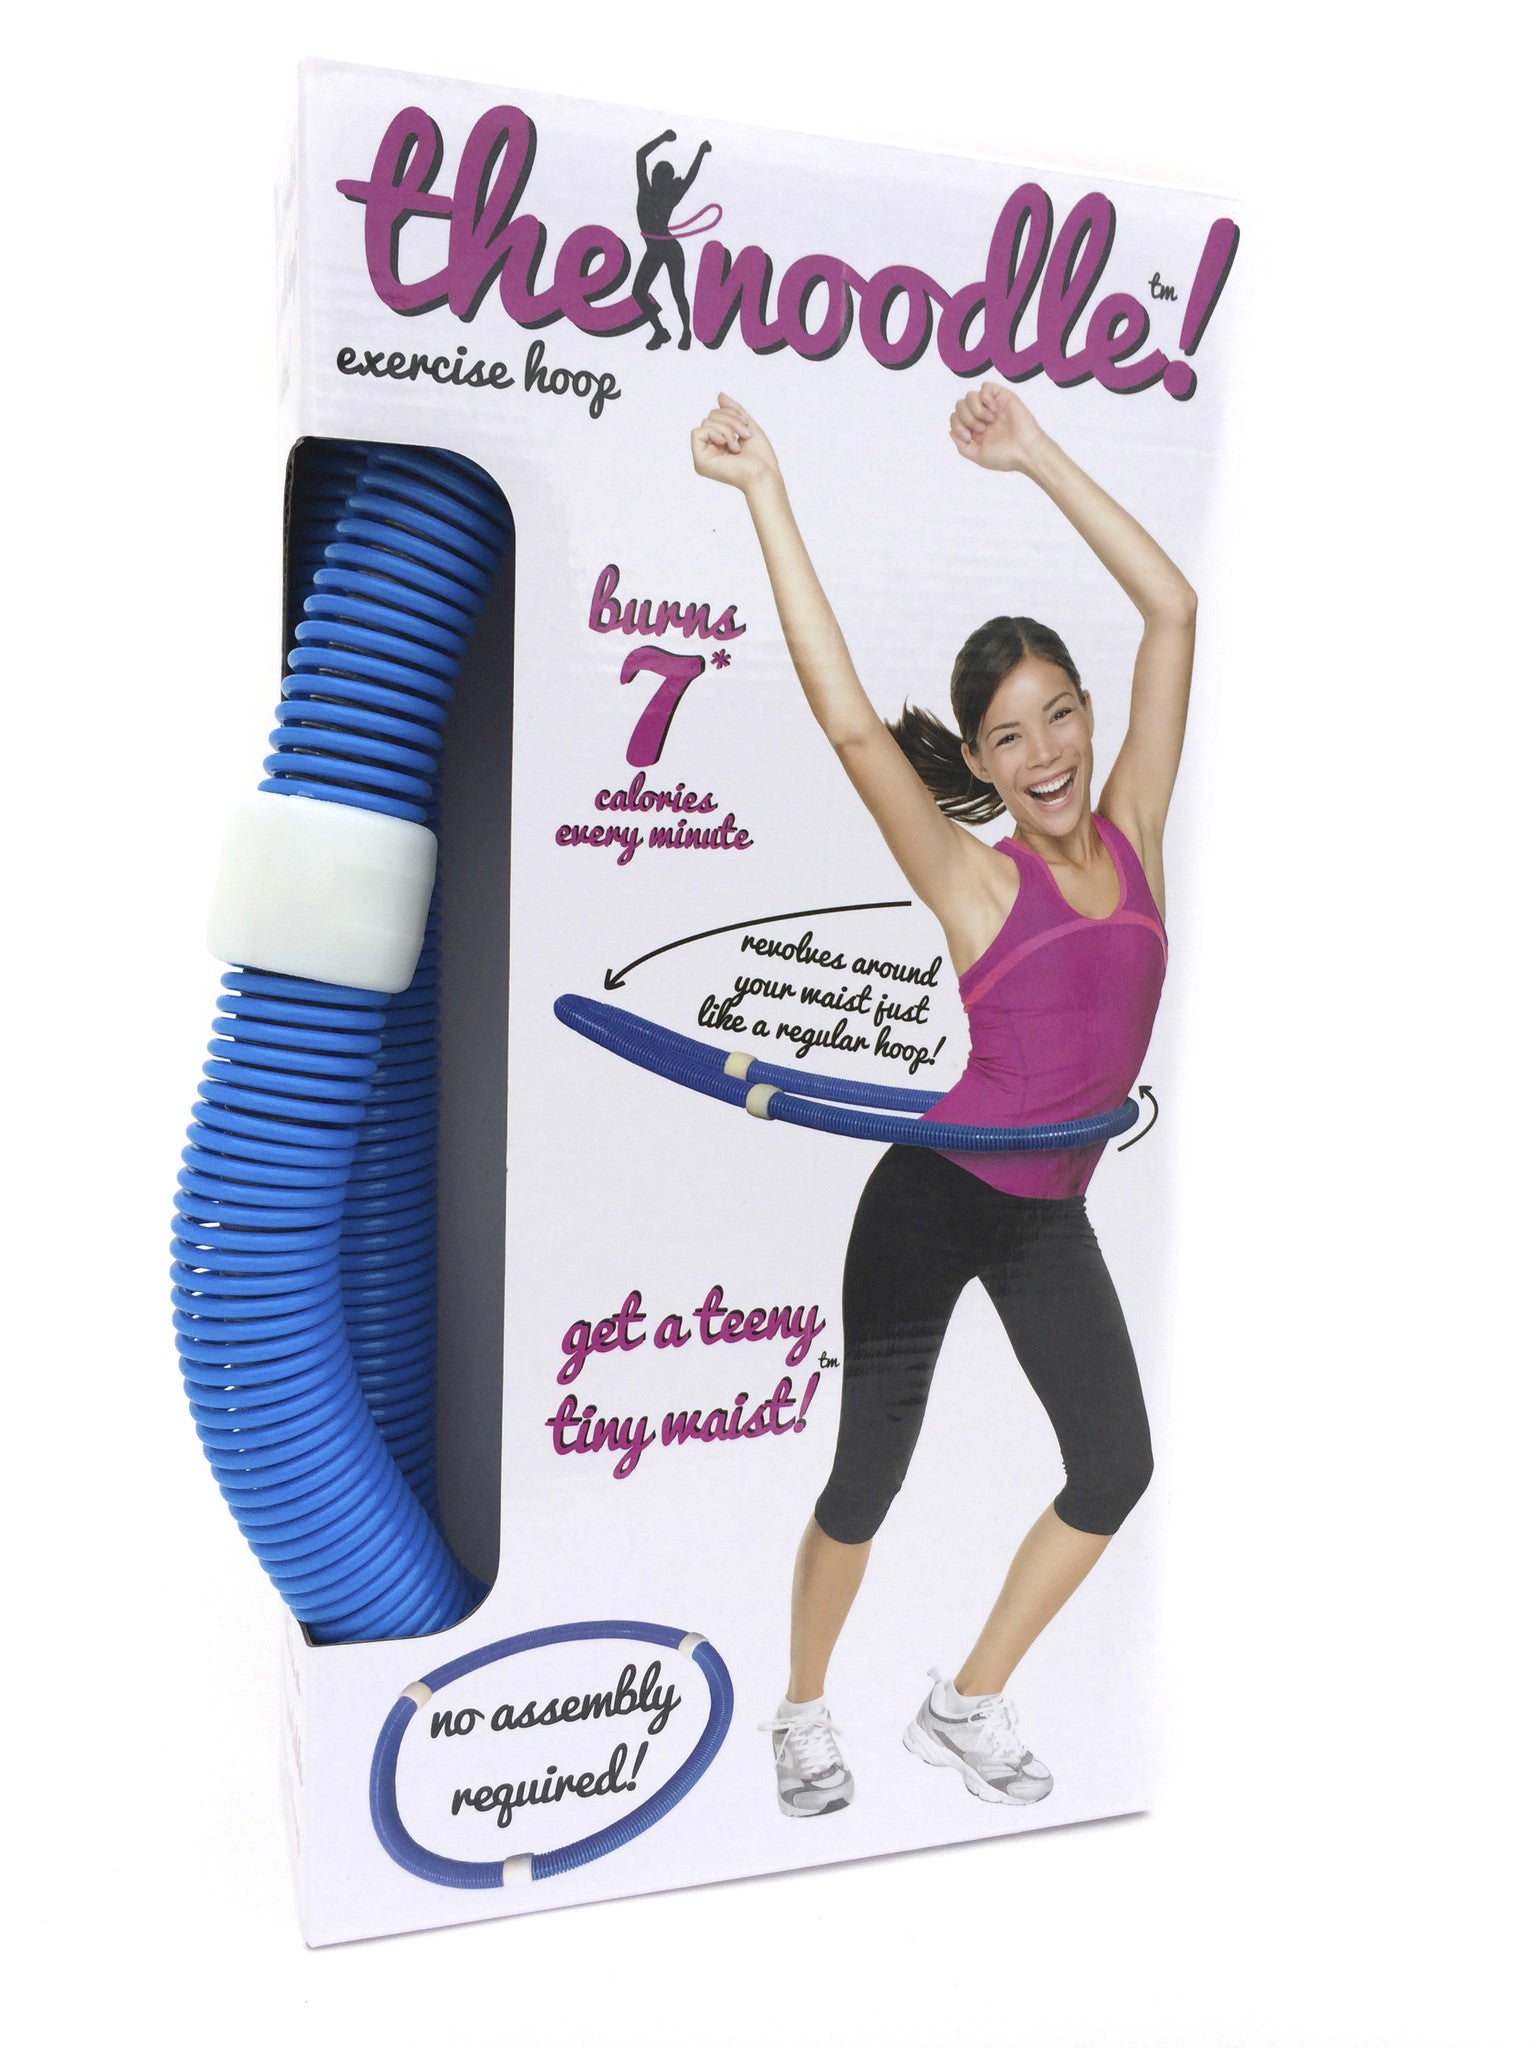 Viahart Noodle Portable Flexible Exercise Spring Hula Hoop - Blue